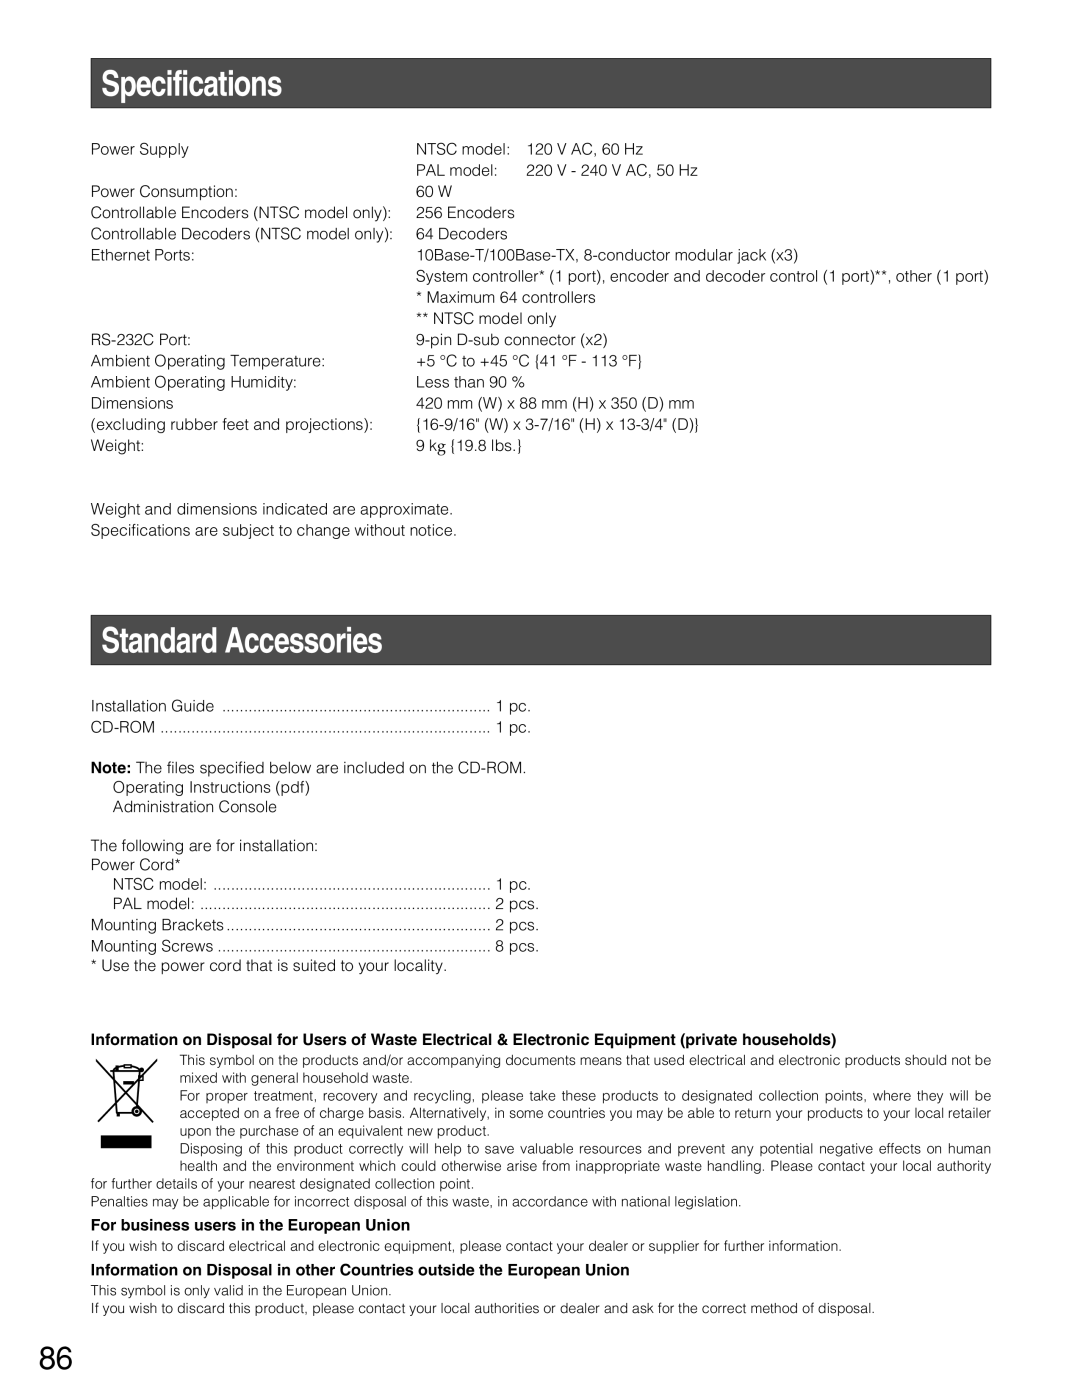 Panasonic WJ-MPU955A manual Specifications, Standard Accessories 